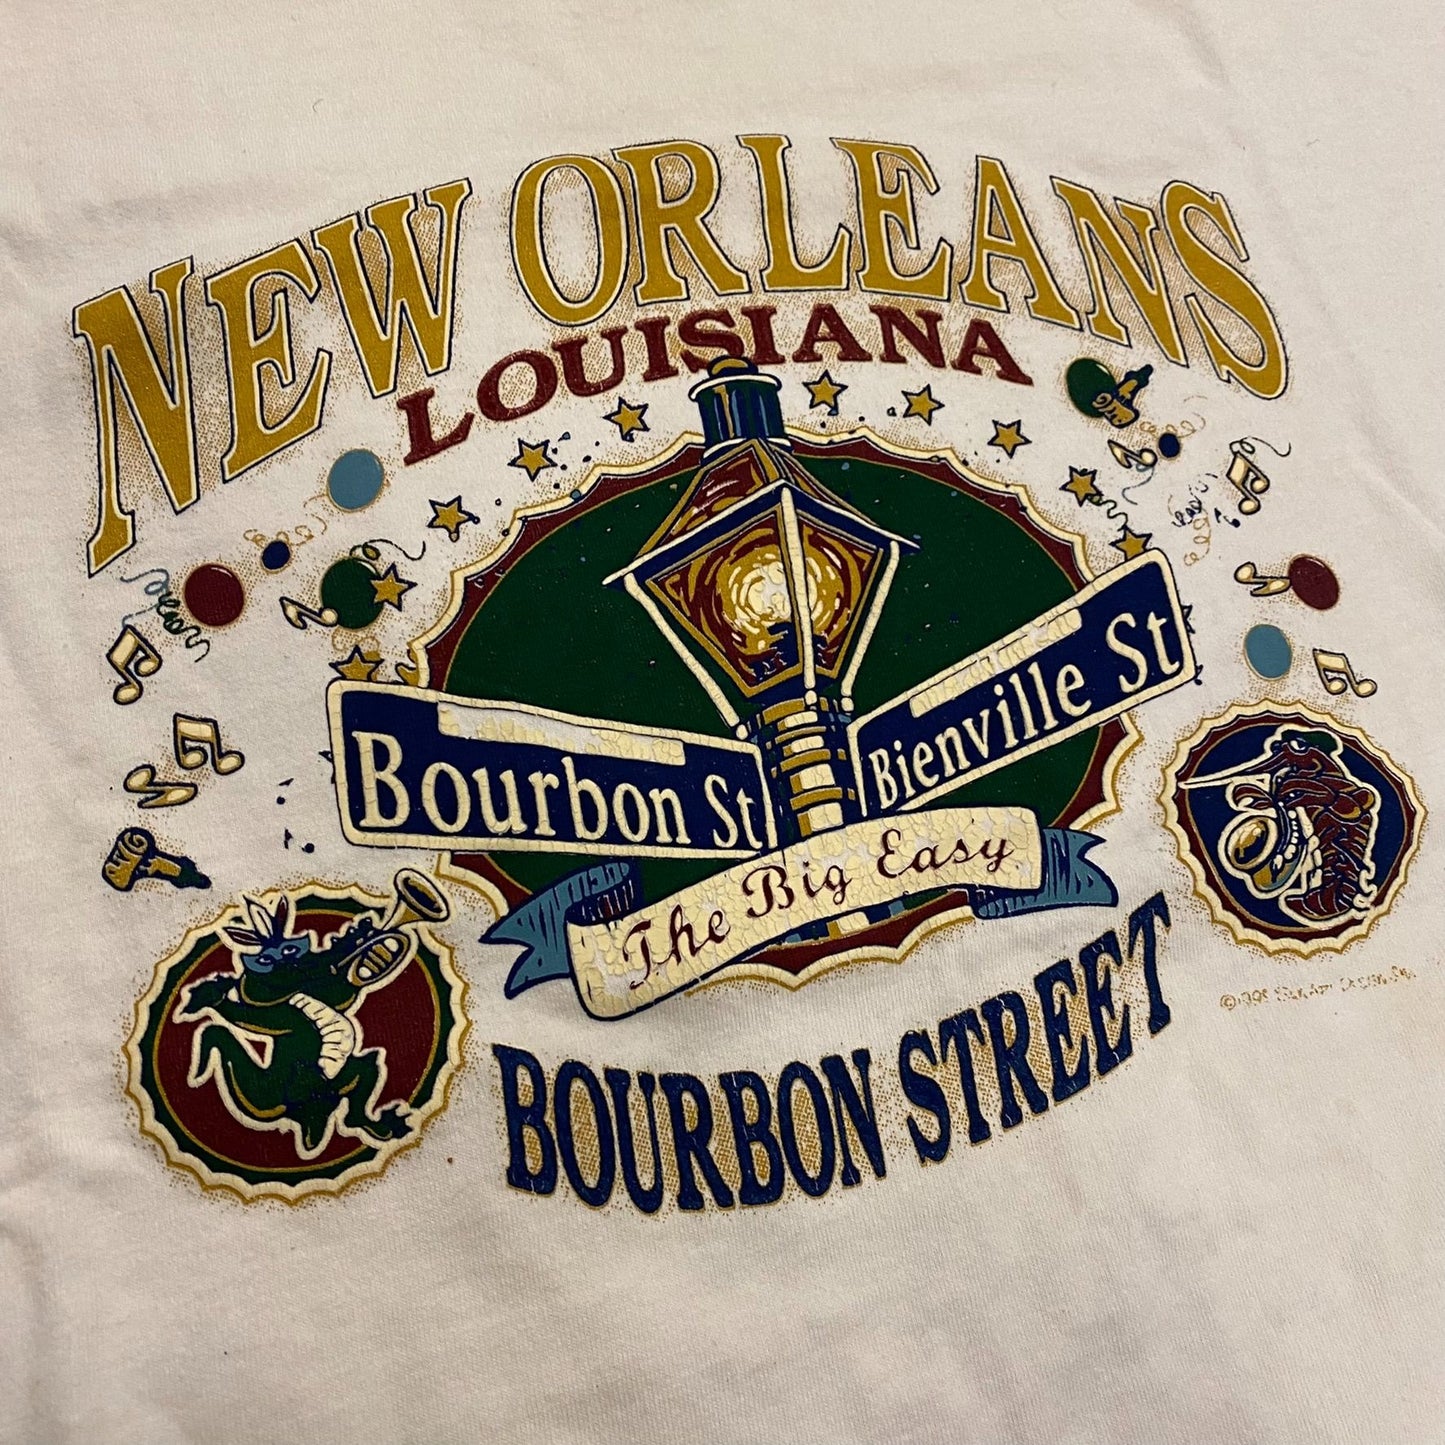 New Orleans Louisiana Vintage T-Shirt